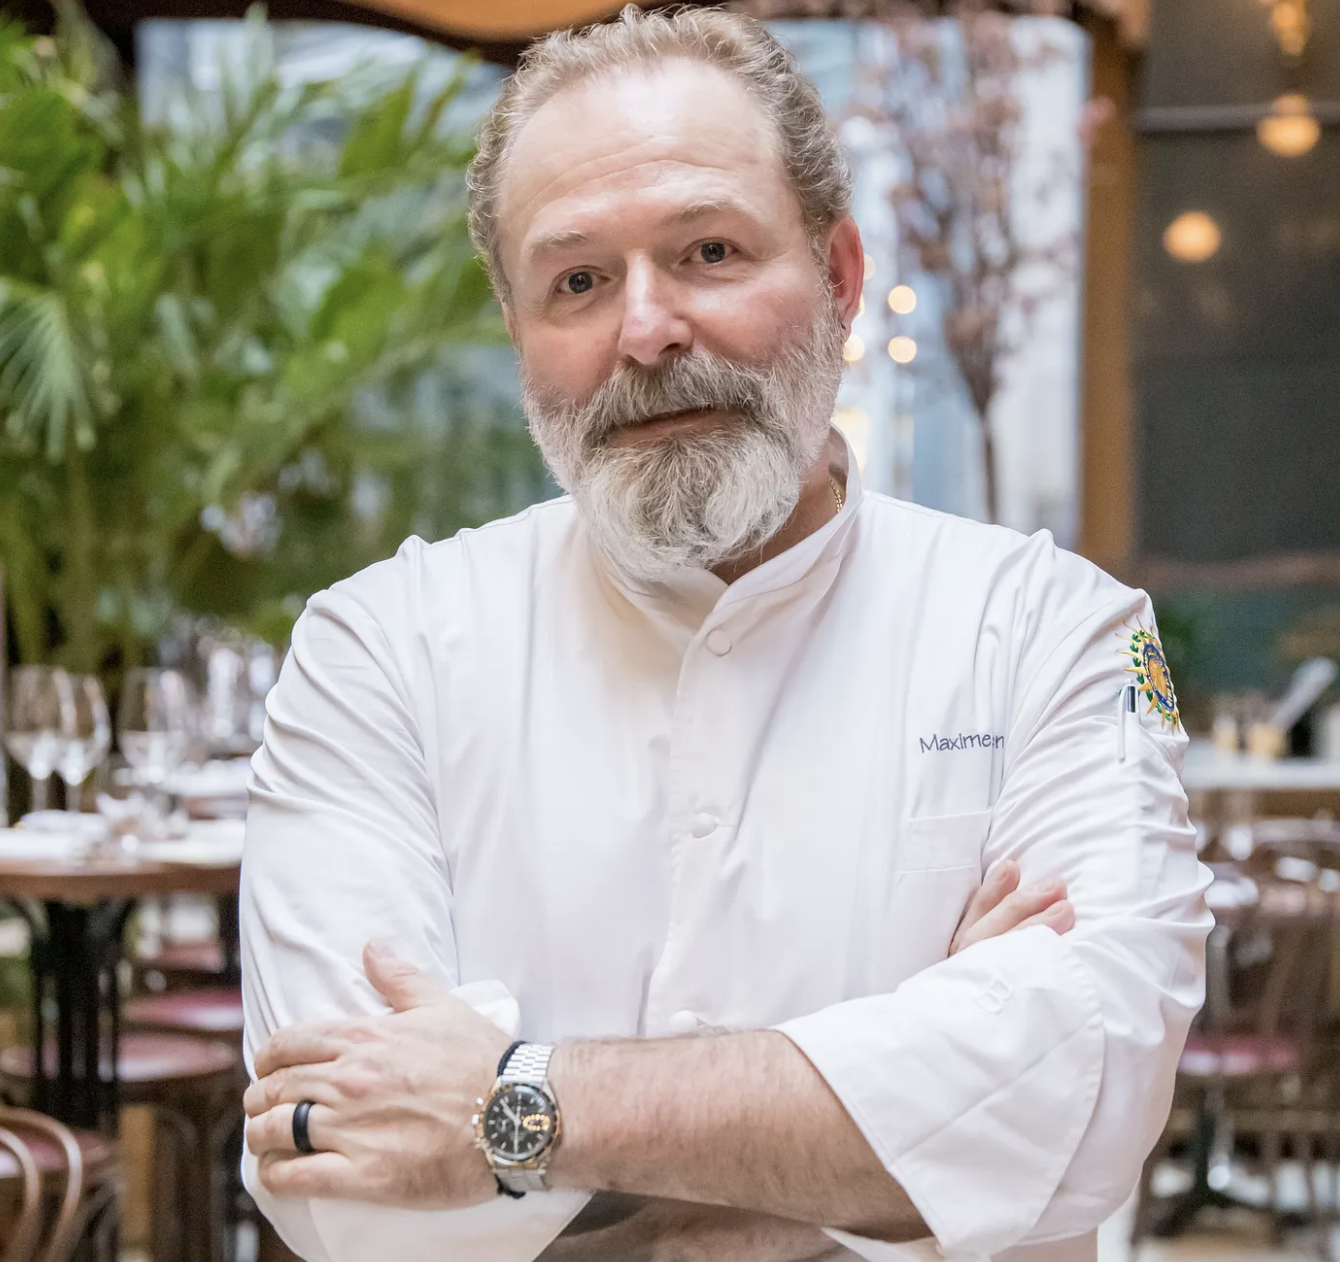 NYC: Manhattan’s La Grande Boucherie Offers a New Springtime Menu led by Executive Chef Maxime Kien